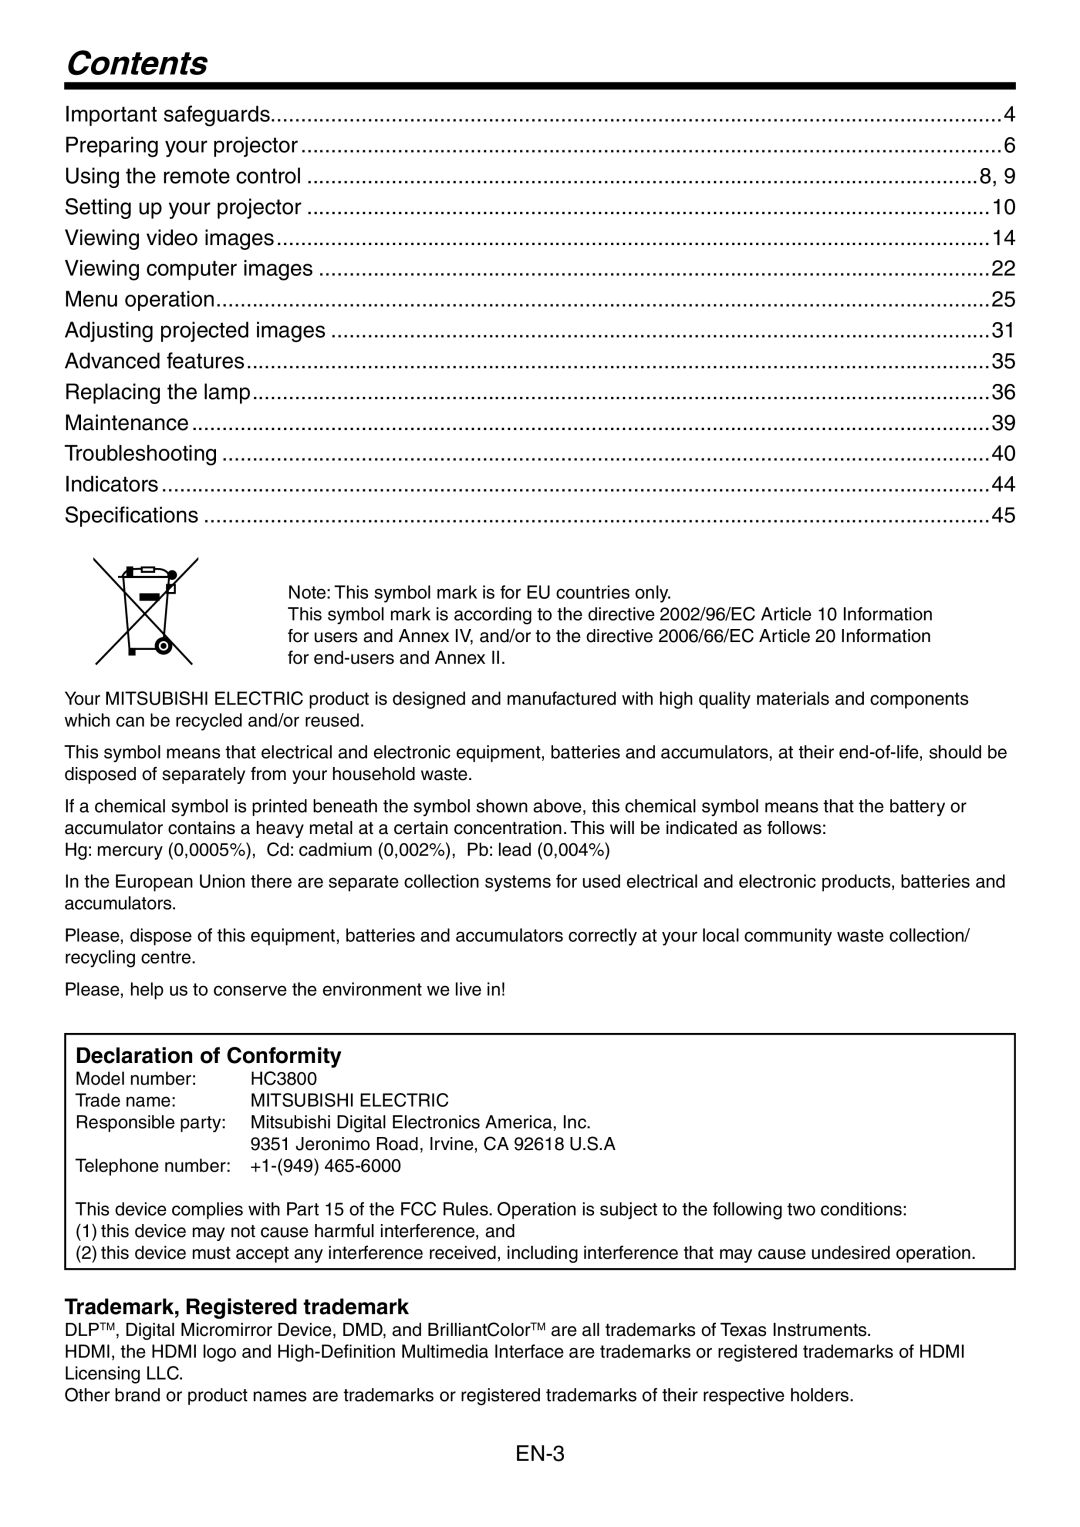 Mitsubishi Electronics HC3800 user manual Contents, Declaration of Conformity, Trademark, Registered trademark 